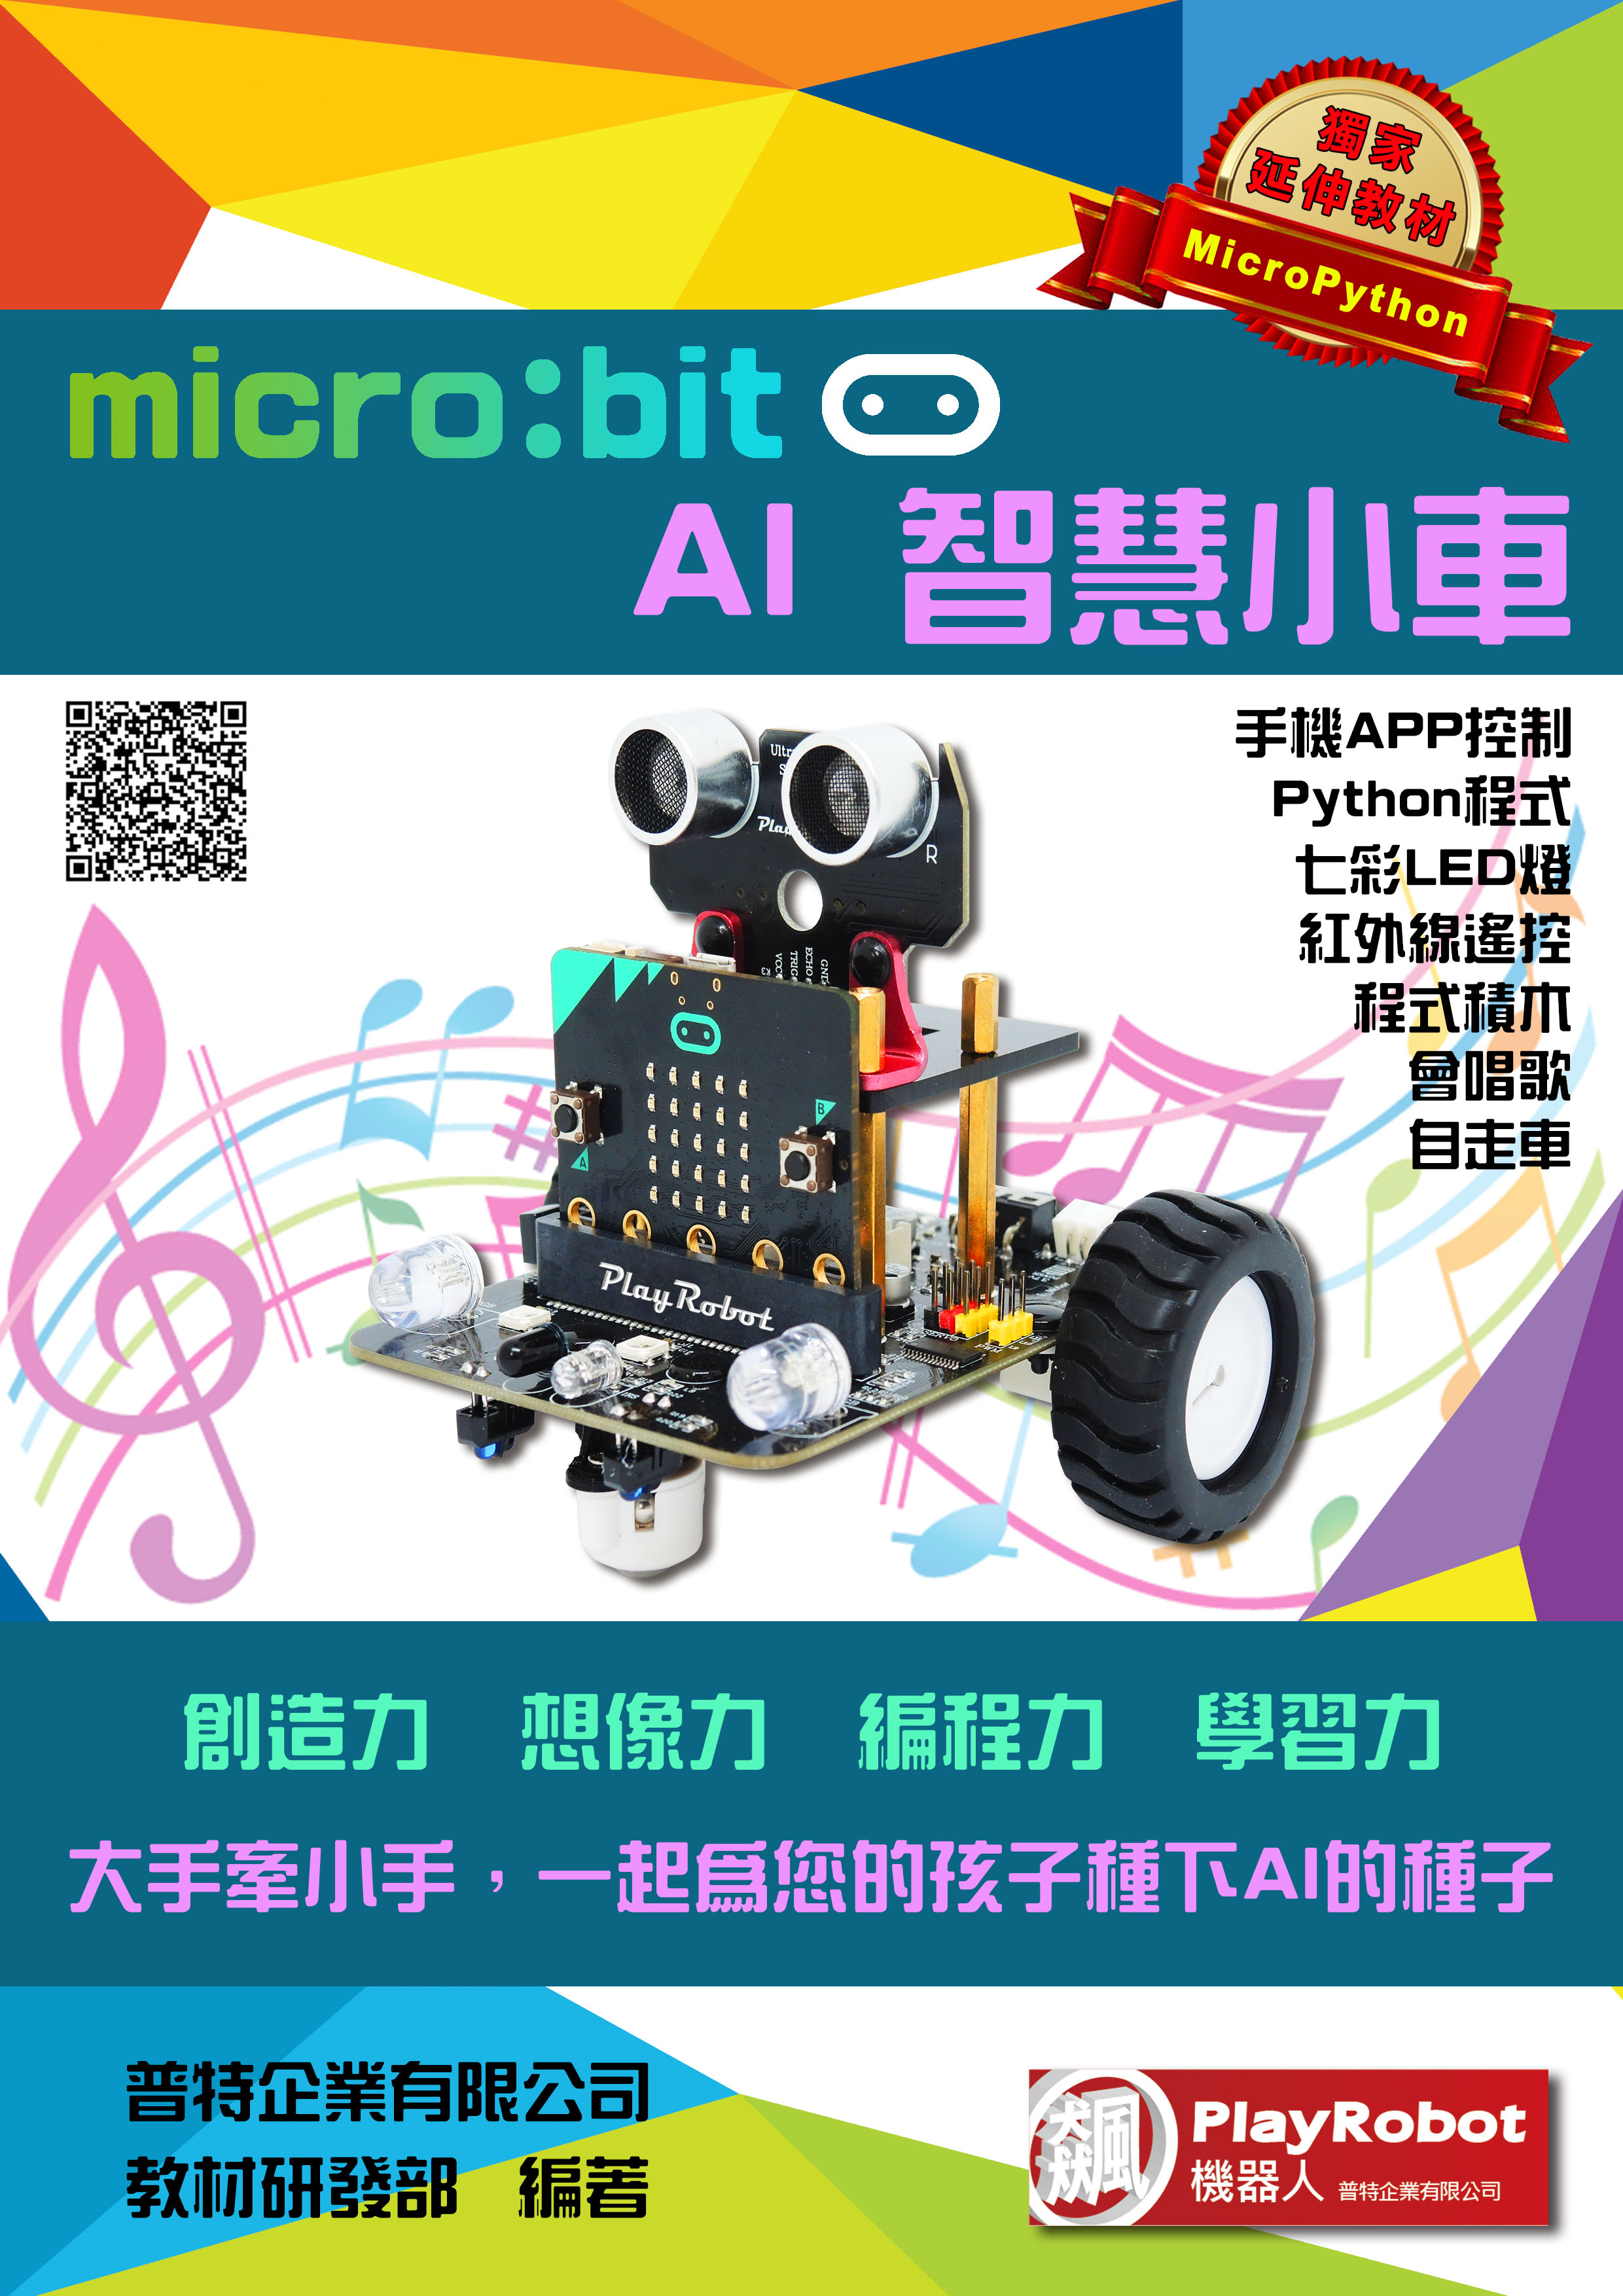 microbit AI car